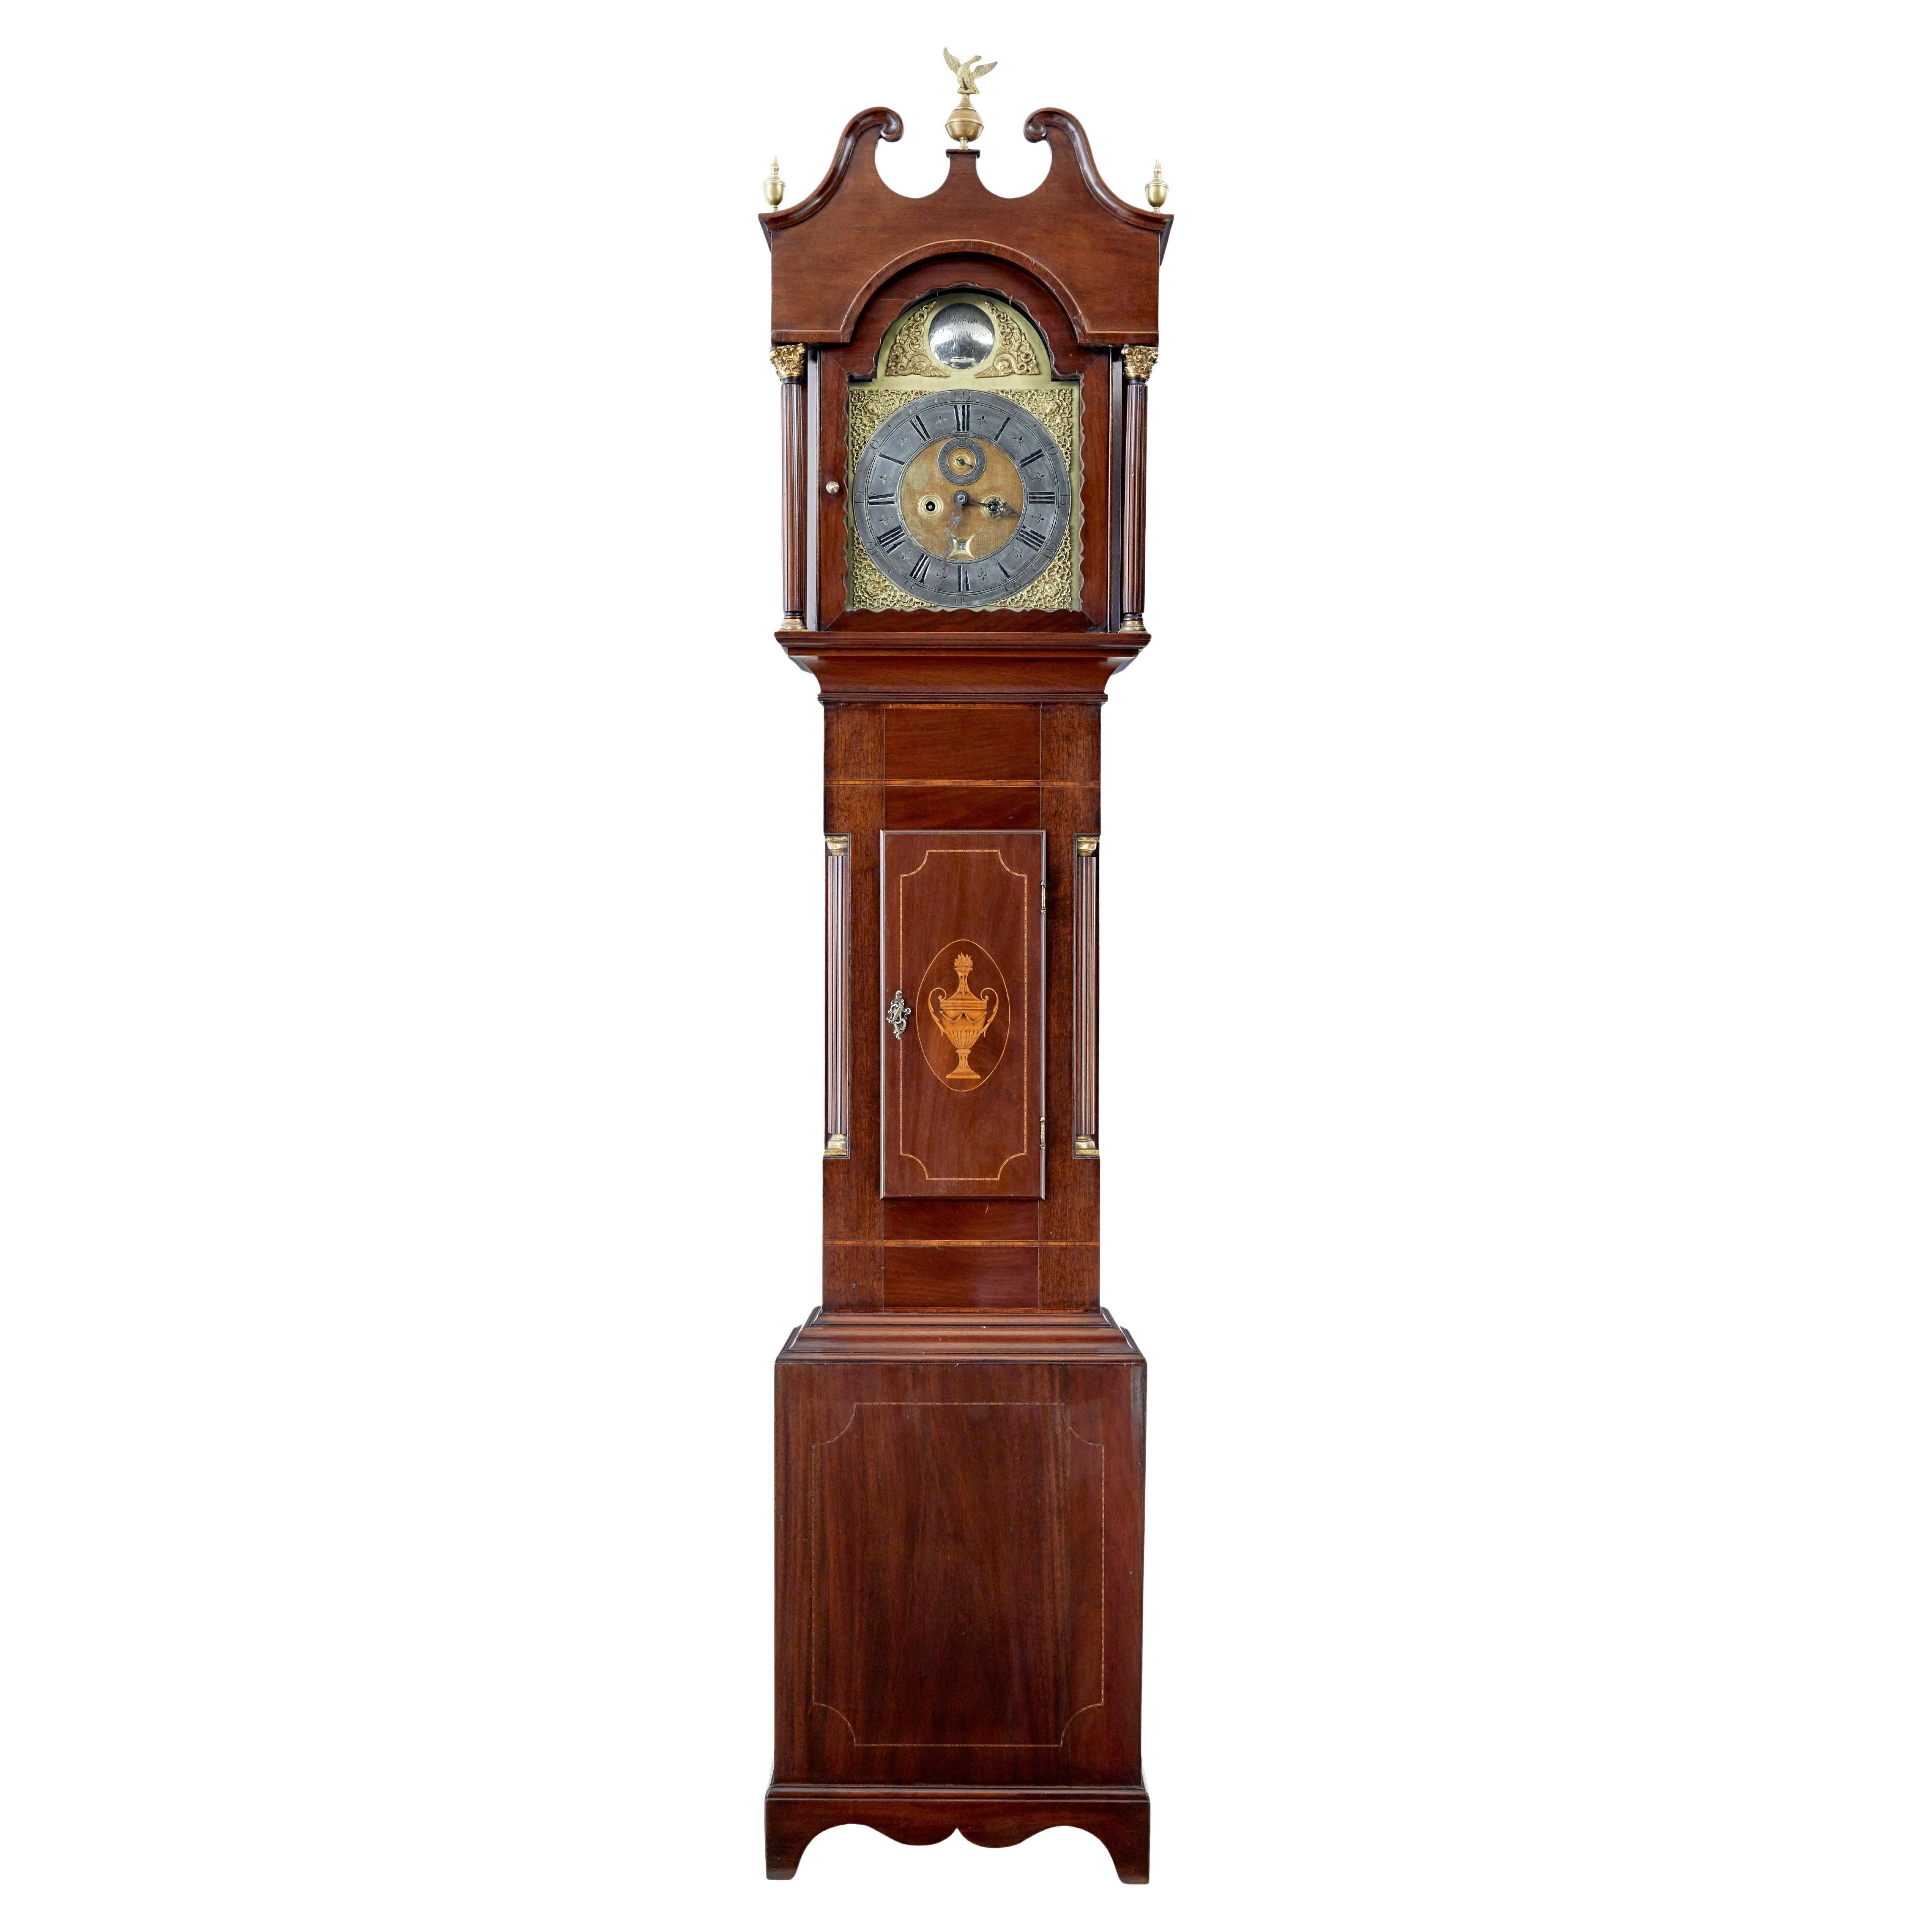 18th century inlaid mahogany long case clock by William Underwood